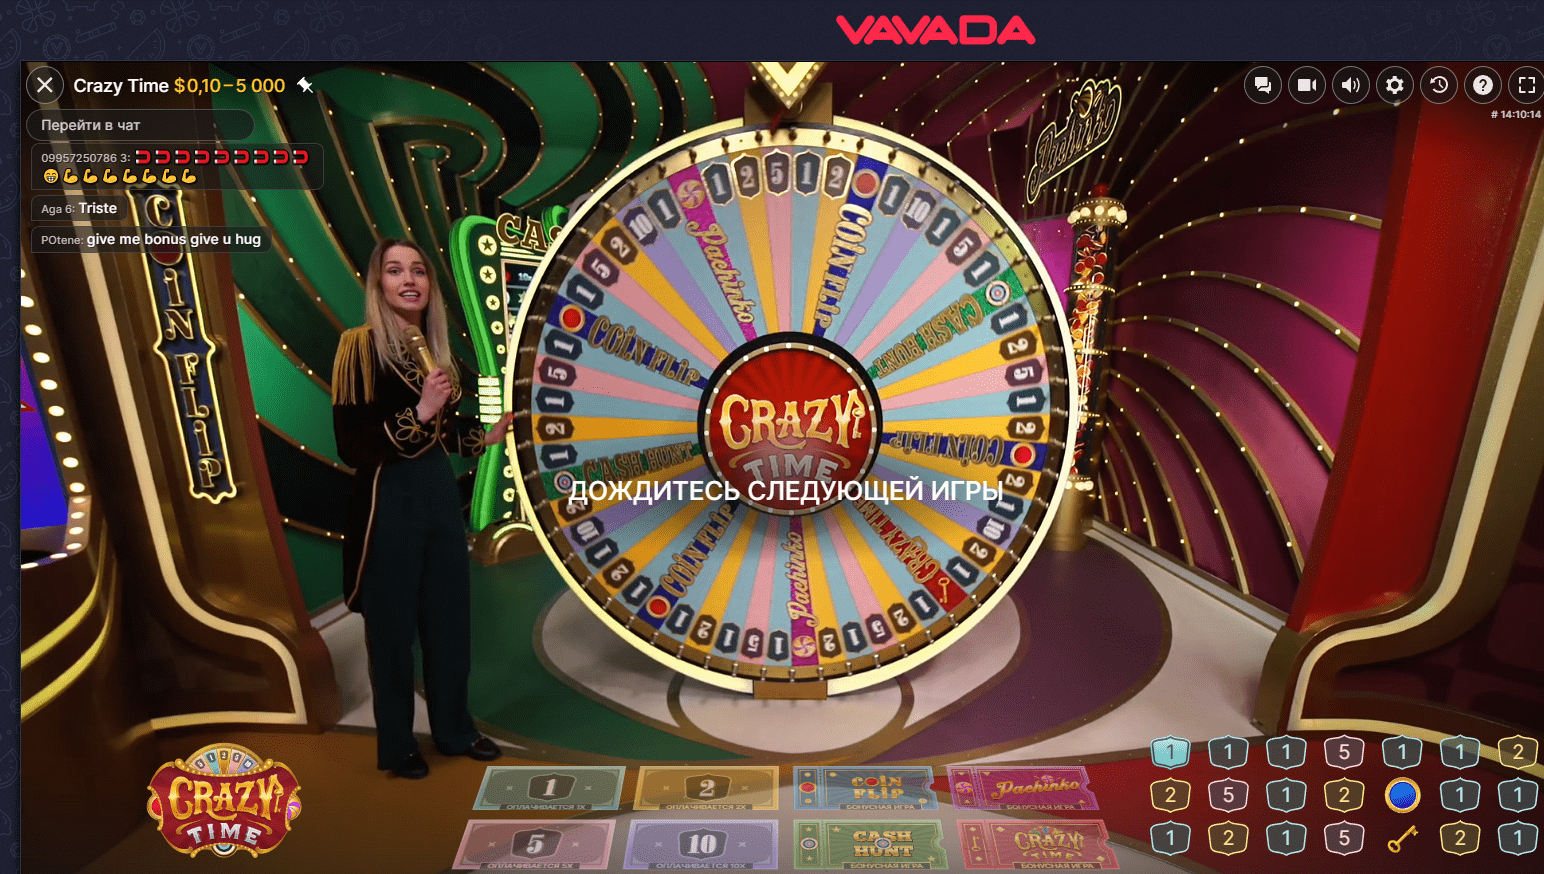 crazy time game at Vavada casino